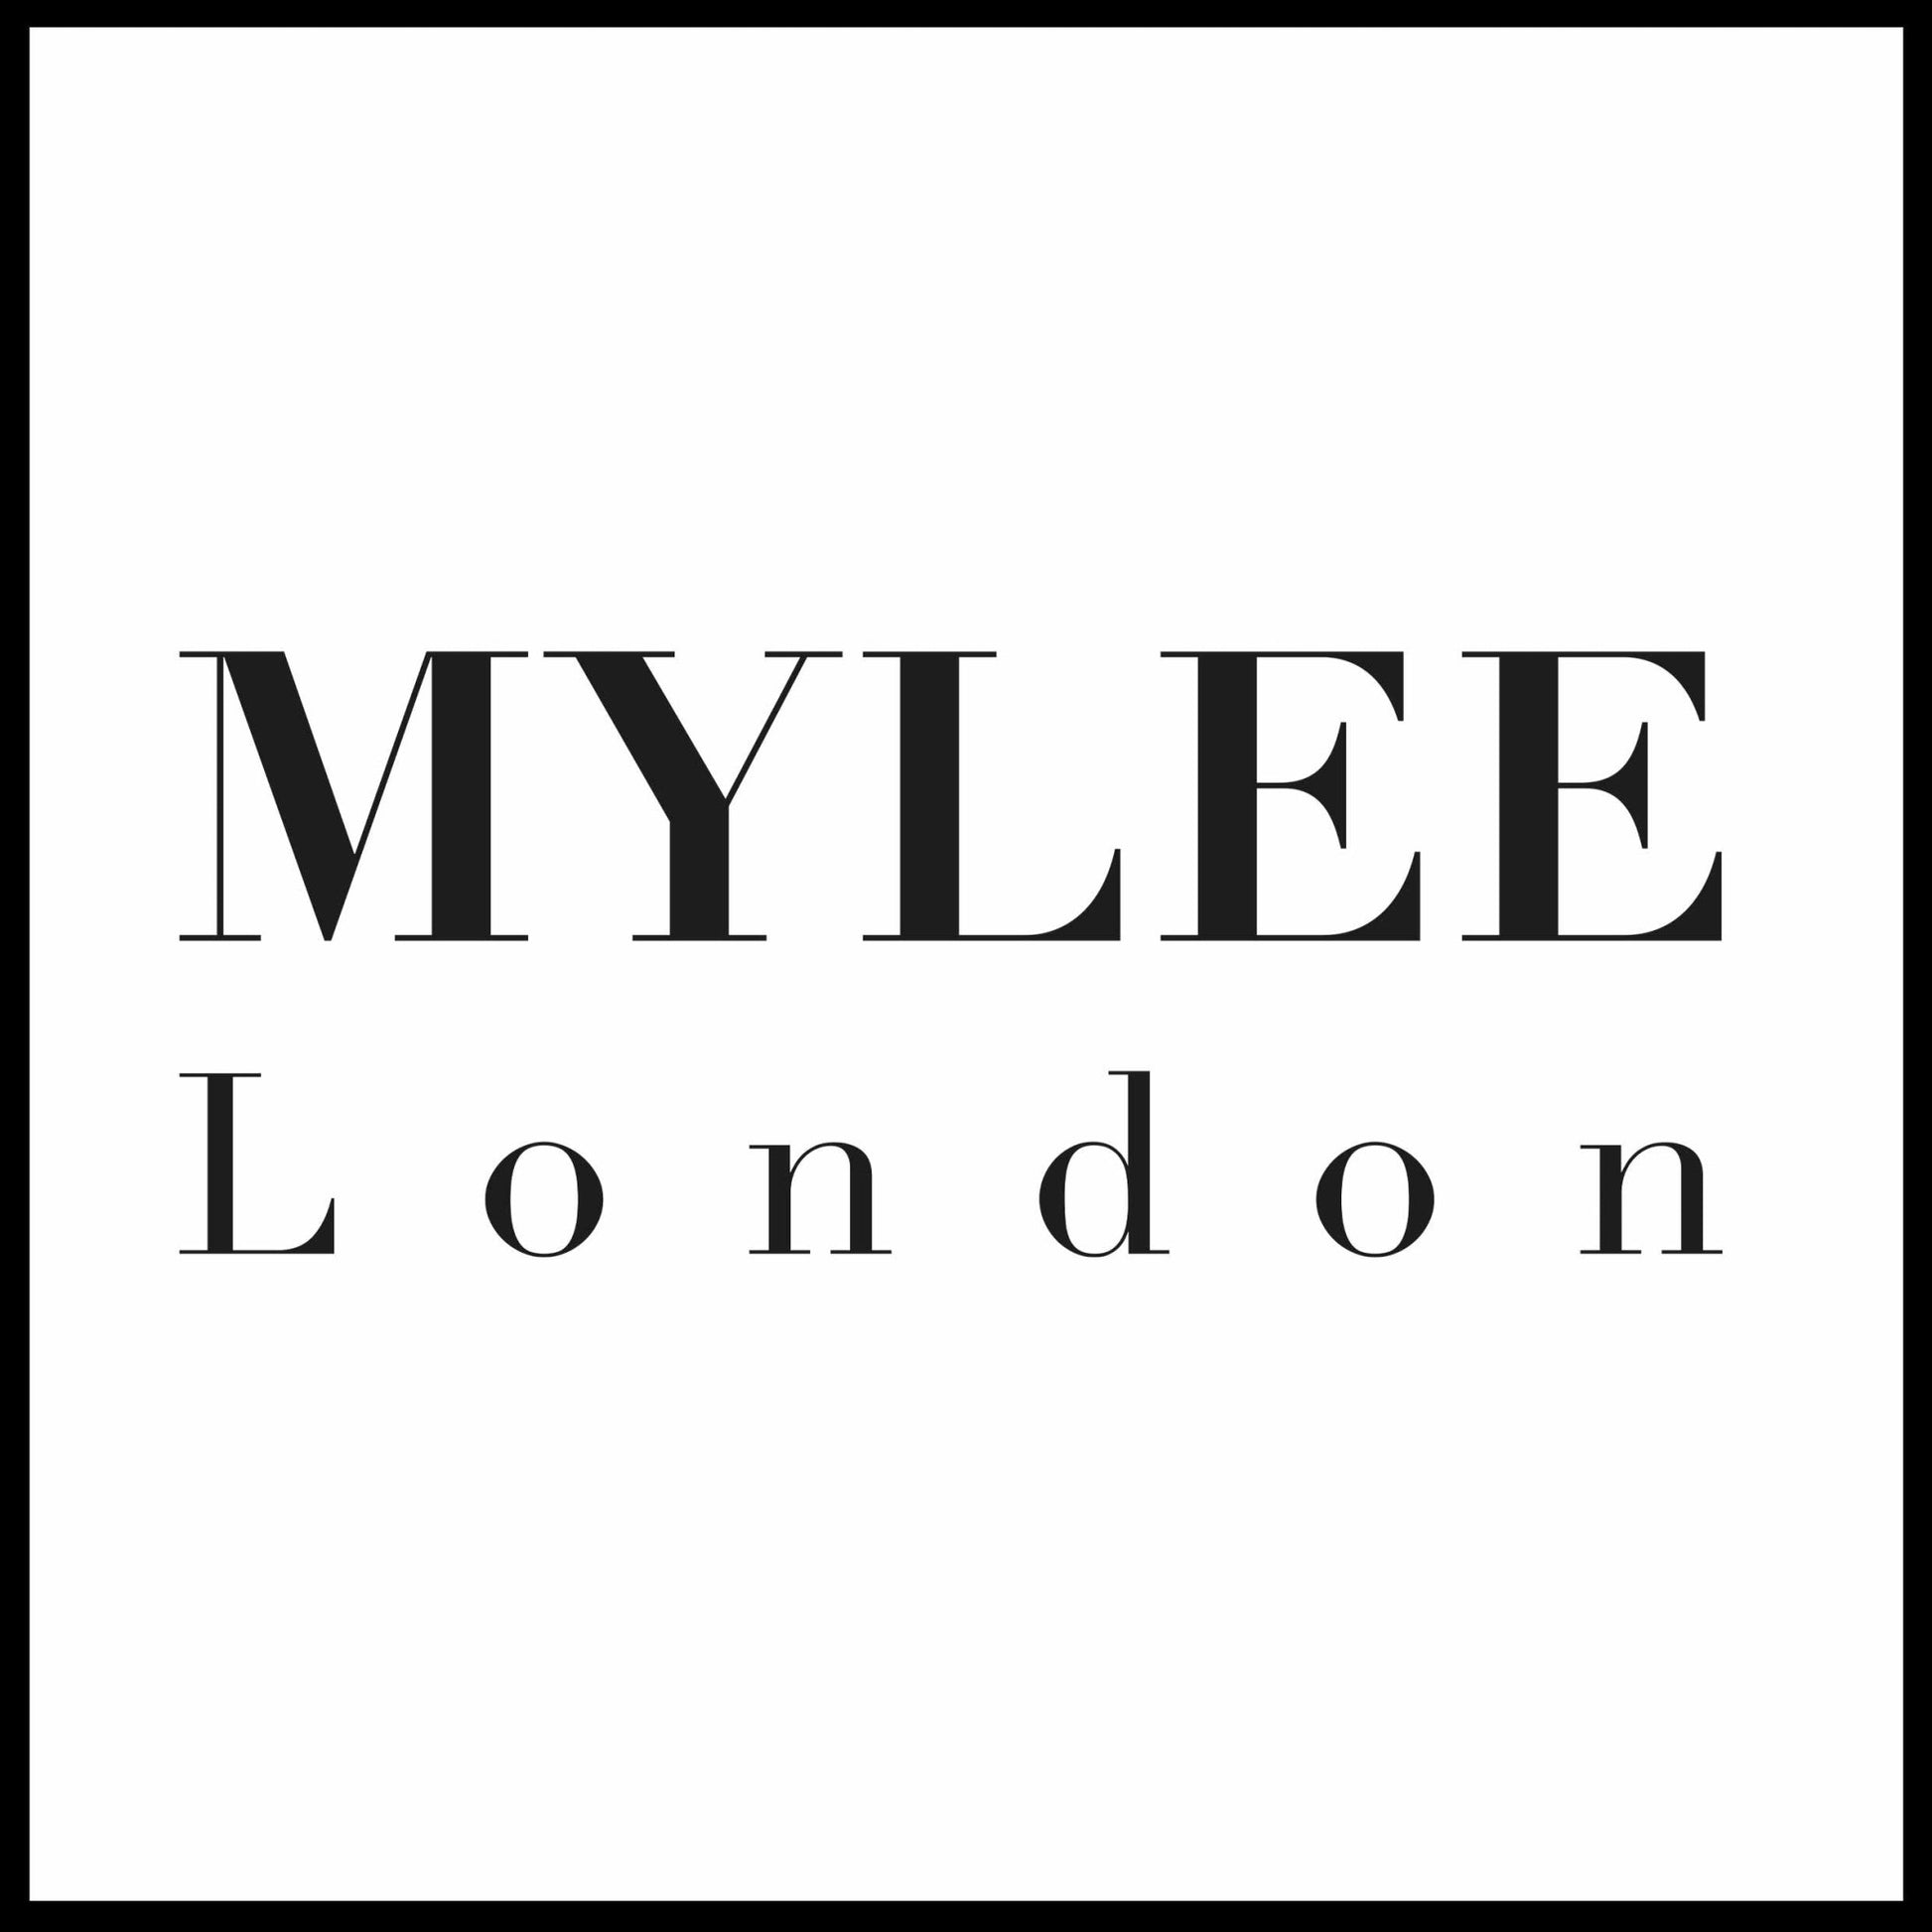 MYLEE London Gift Card - MYLEE London